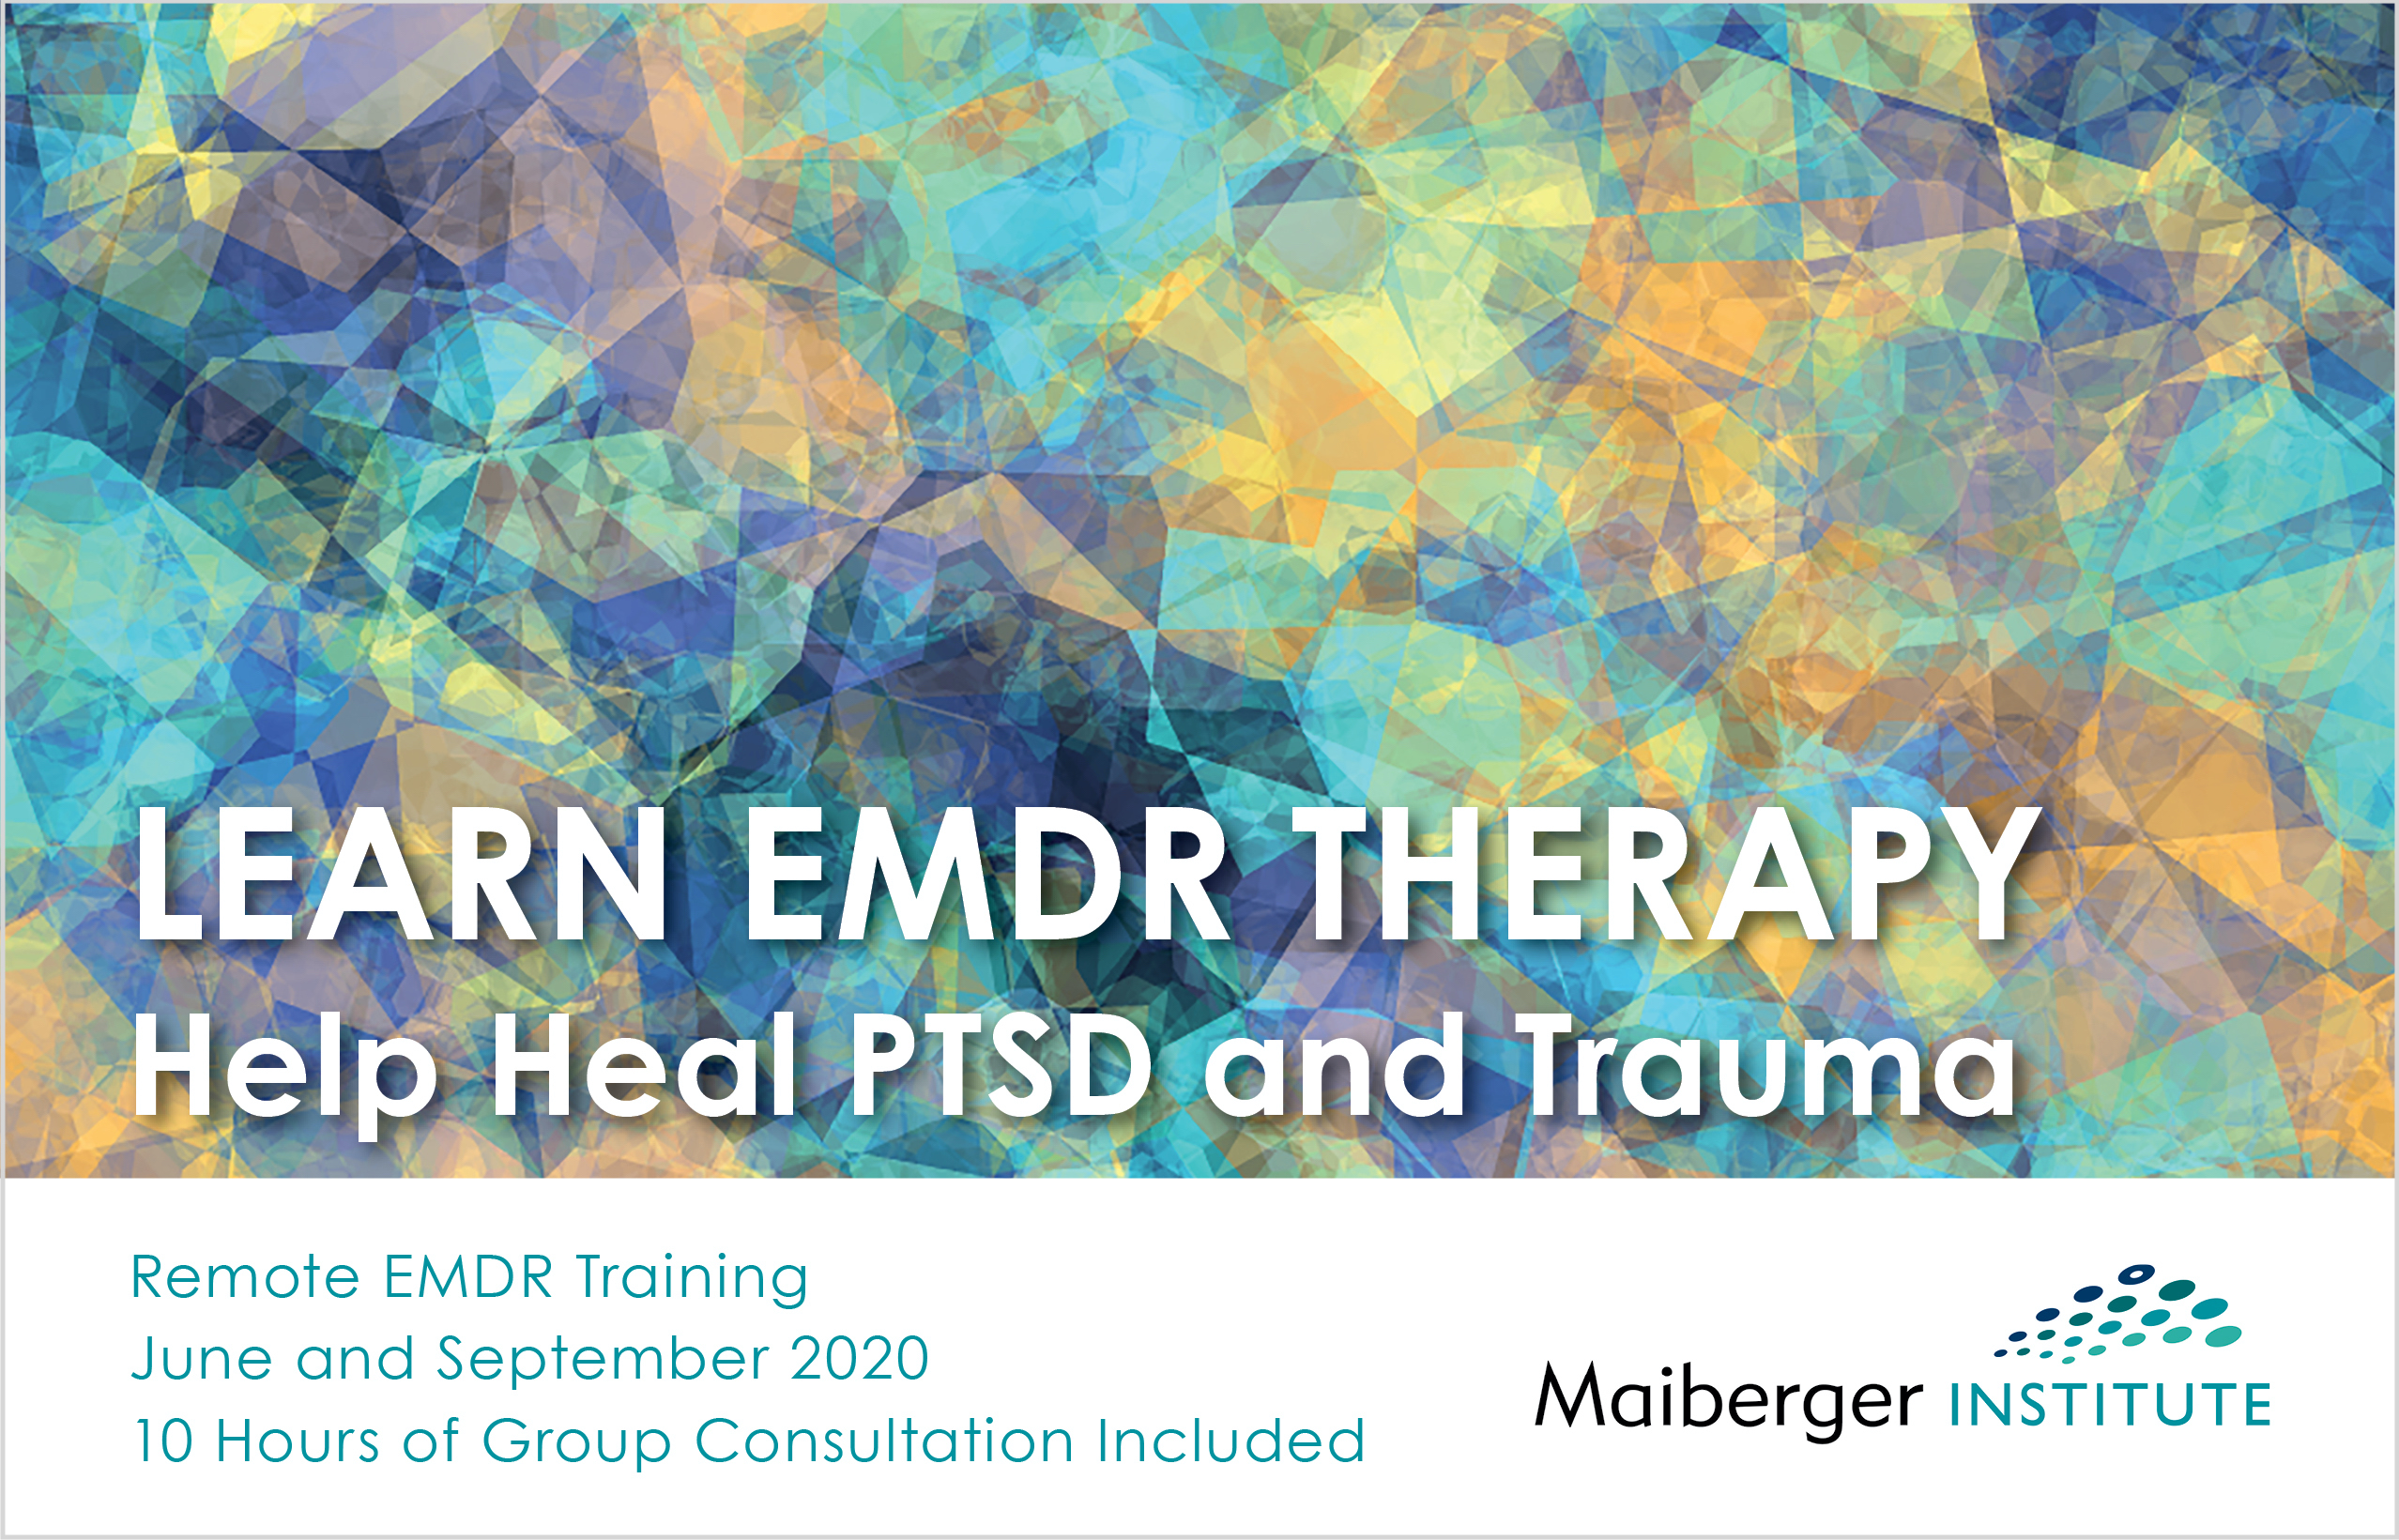 Remote EMDR Training - June and September 2020 - EMDR Training Schedule - Maiberger Institute